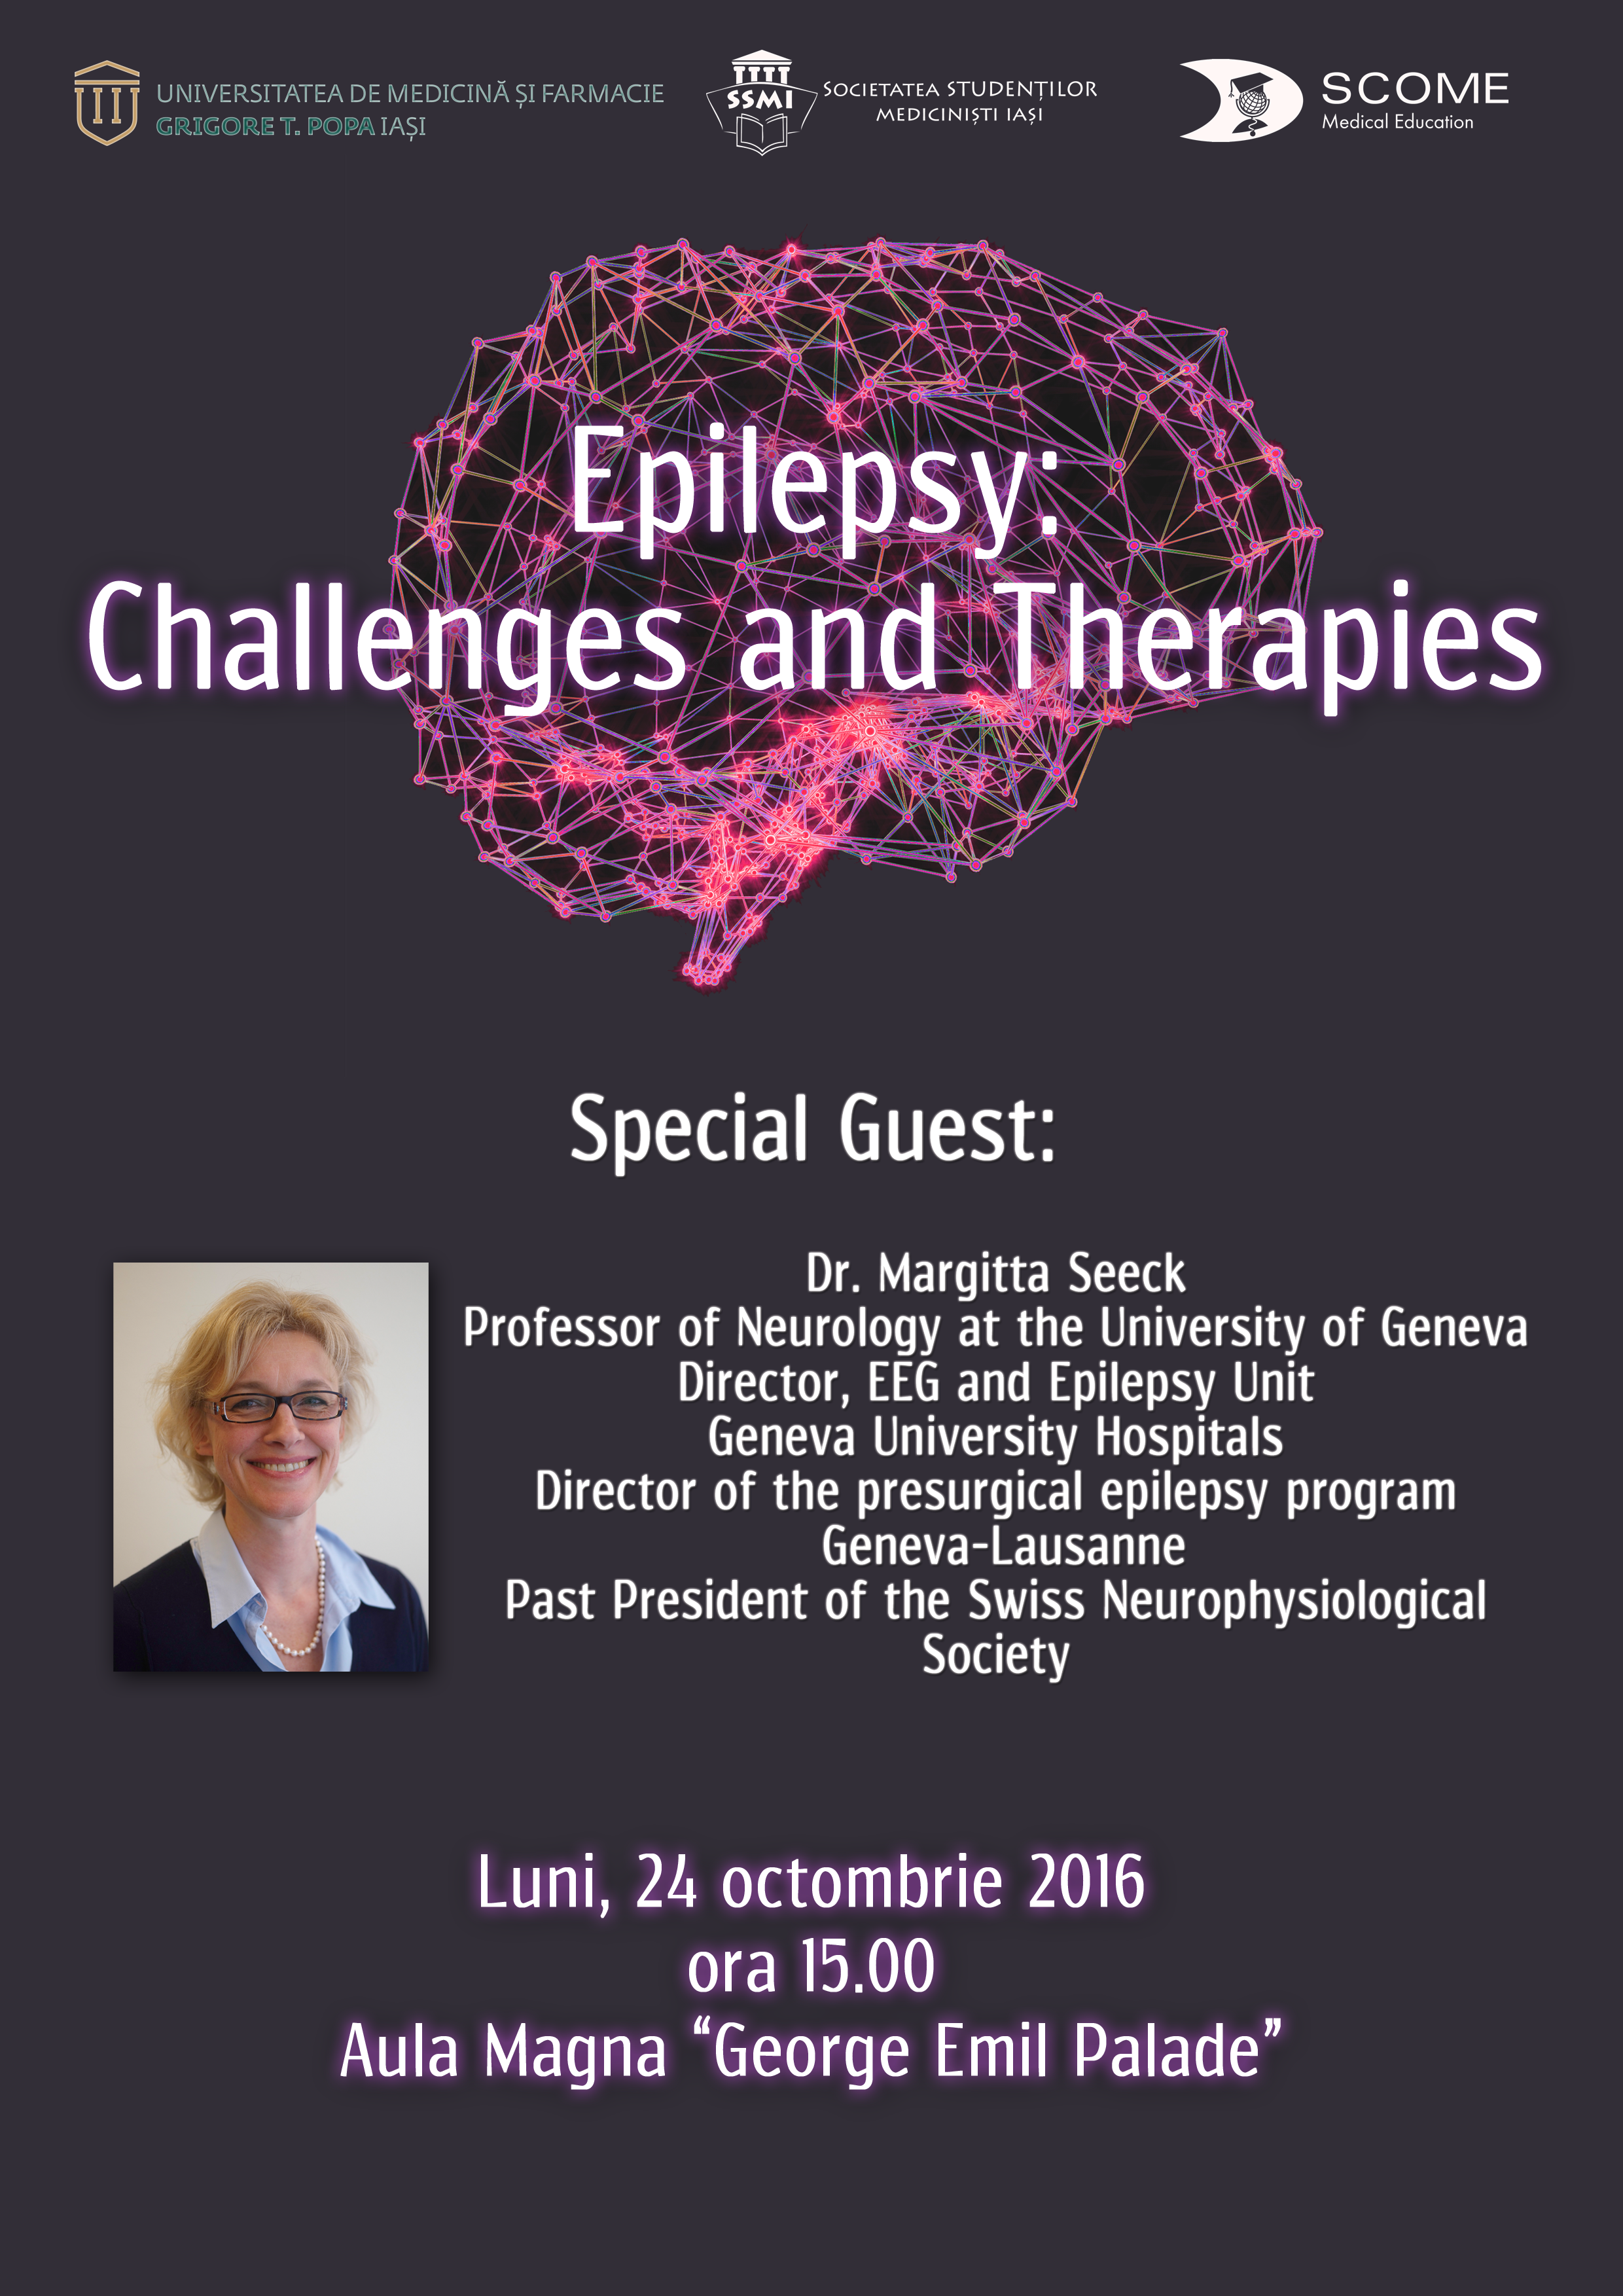 Conferinta organizata de SSMI: ”Epilespy: Challenges and Therapies”